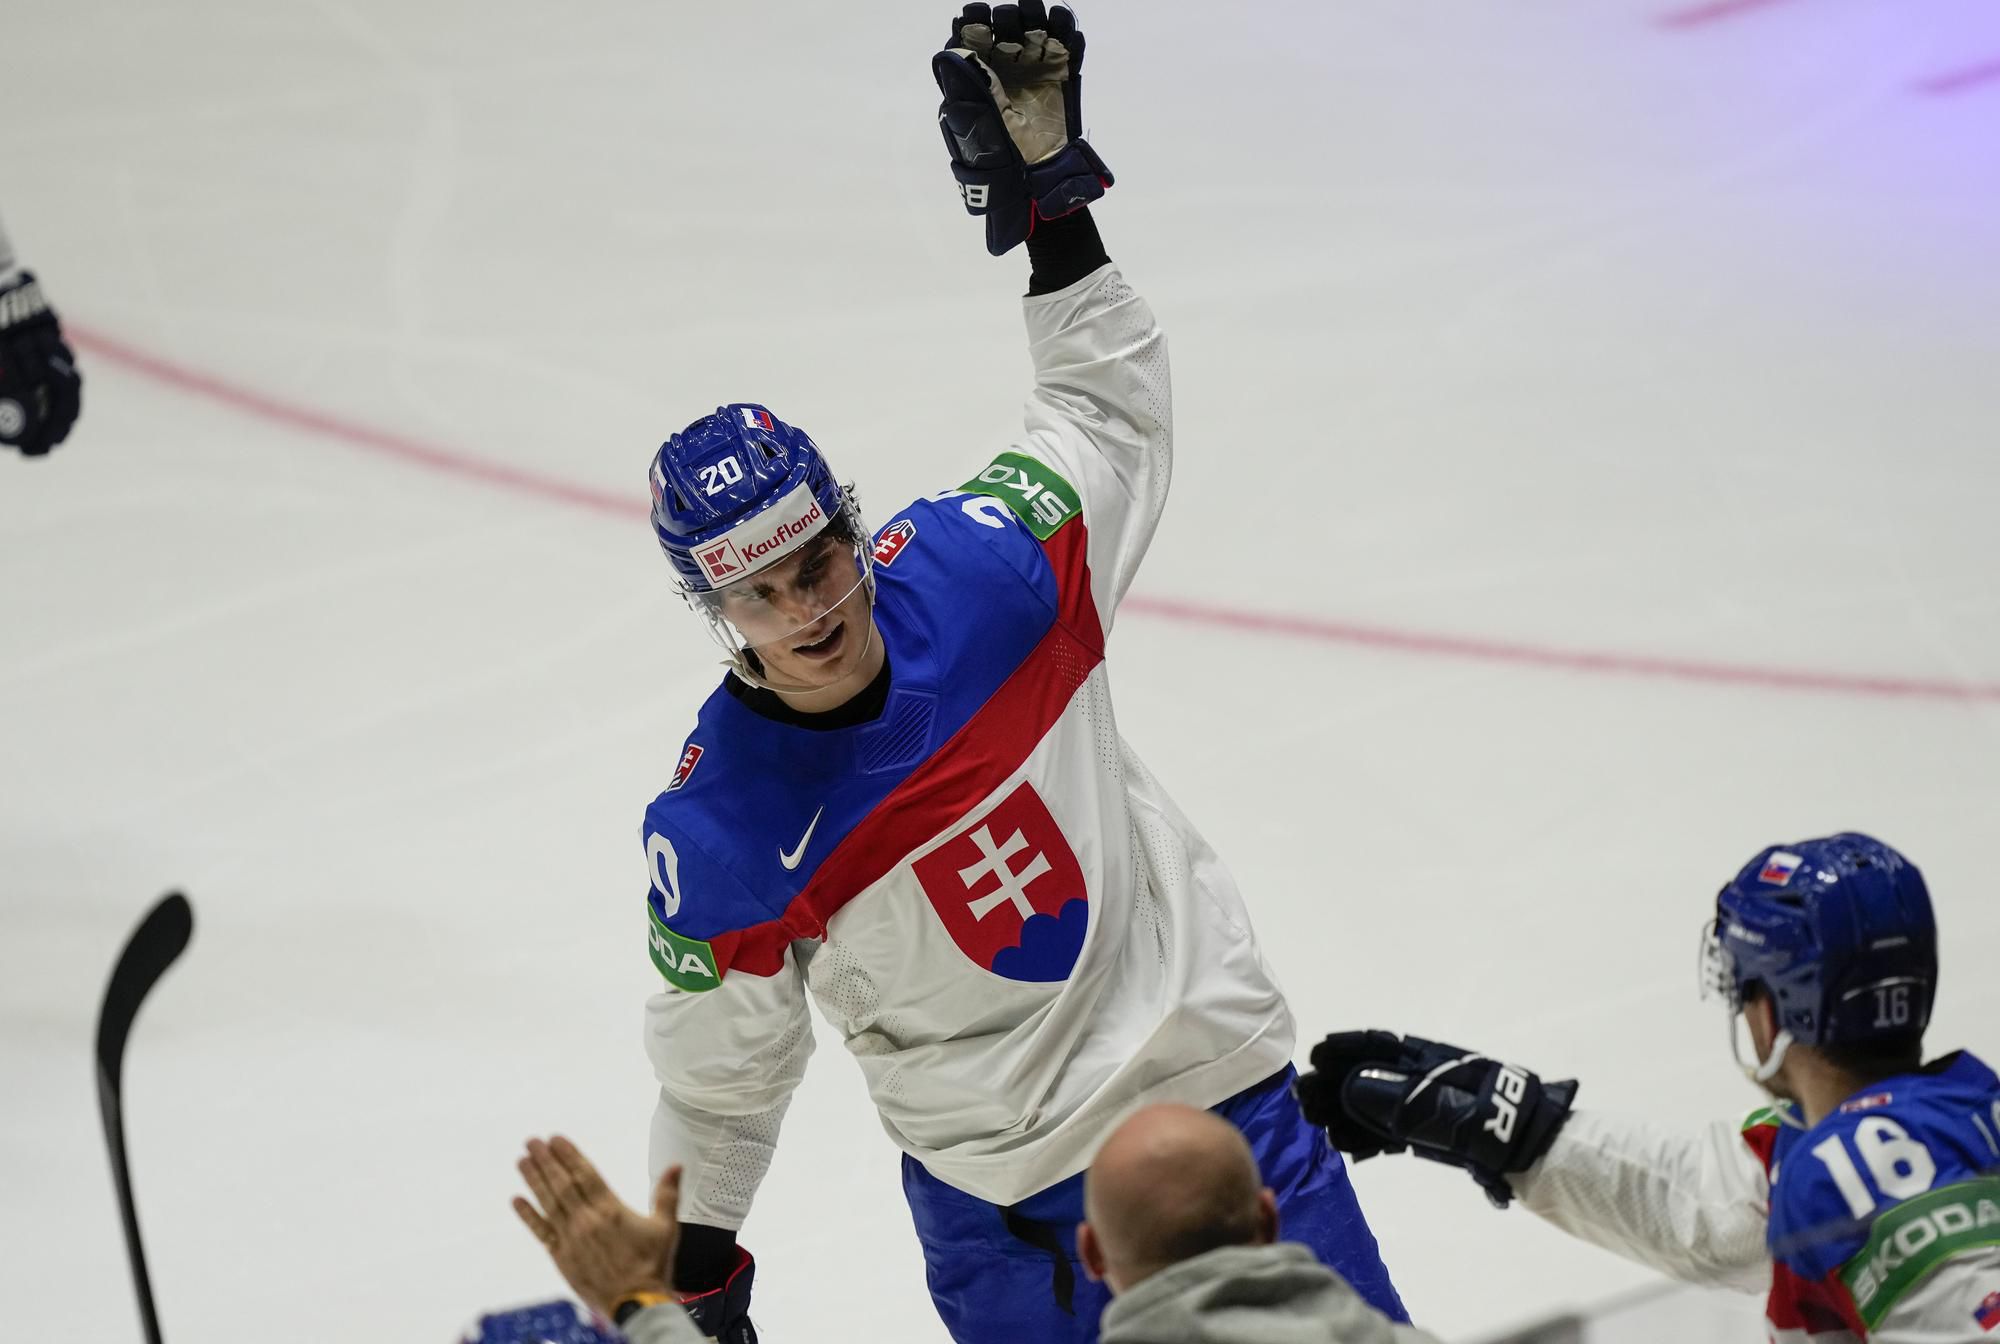 MS v hokeji 2022: Švajčiarsko - Slovensko (Juraj Slafkovský sa teší z gólu)